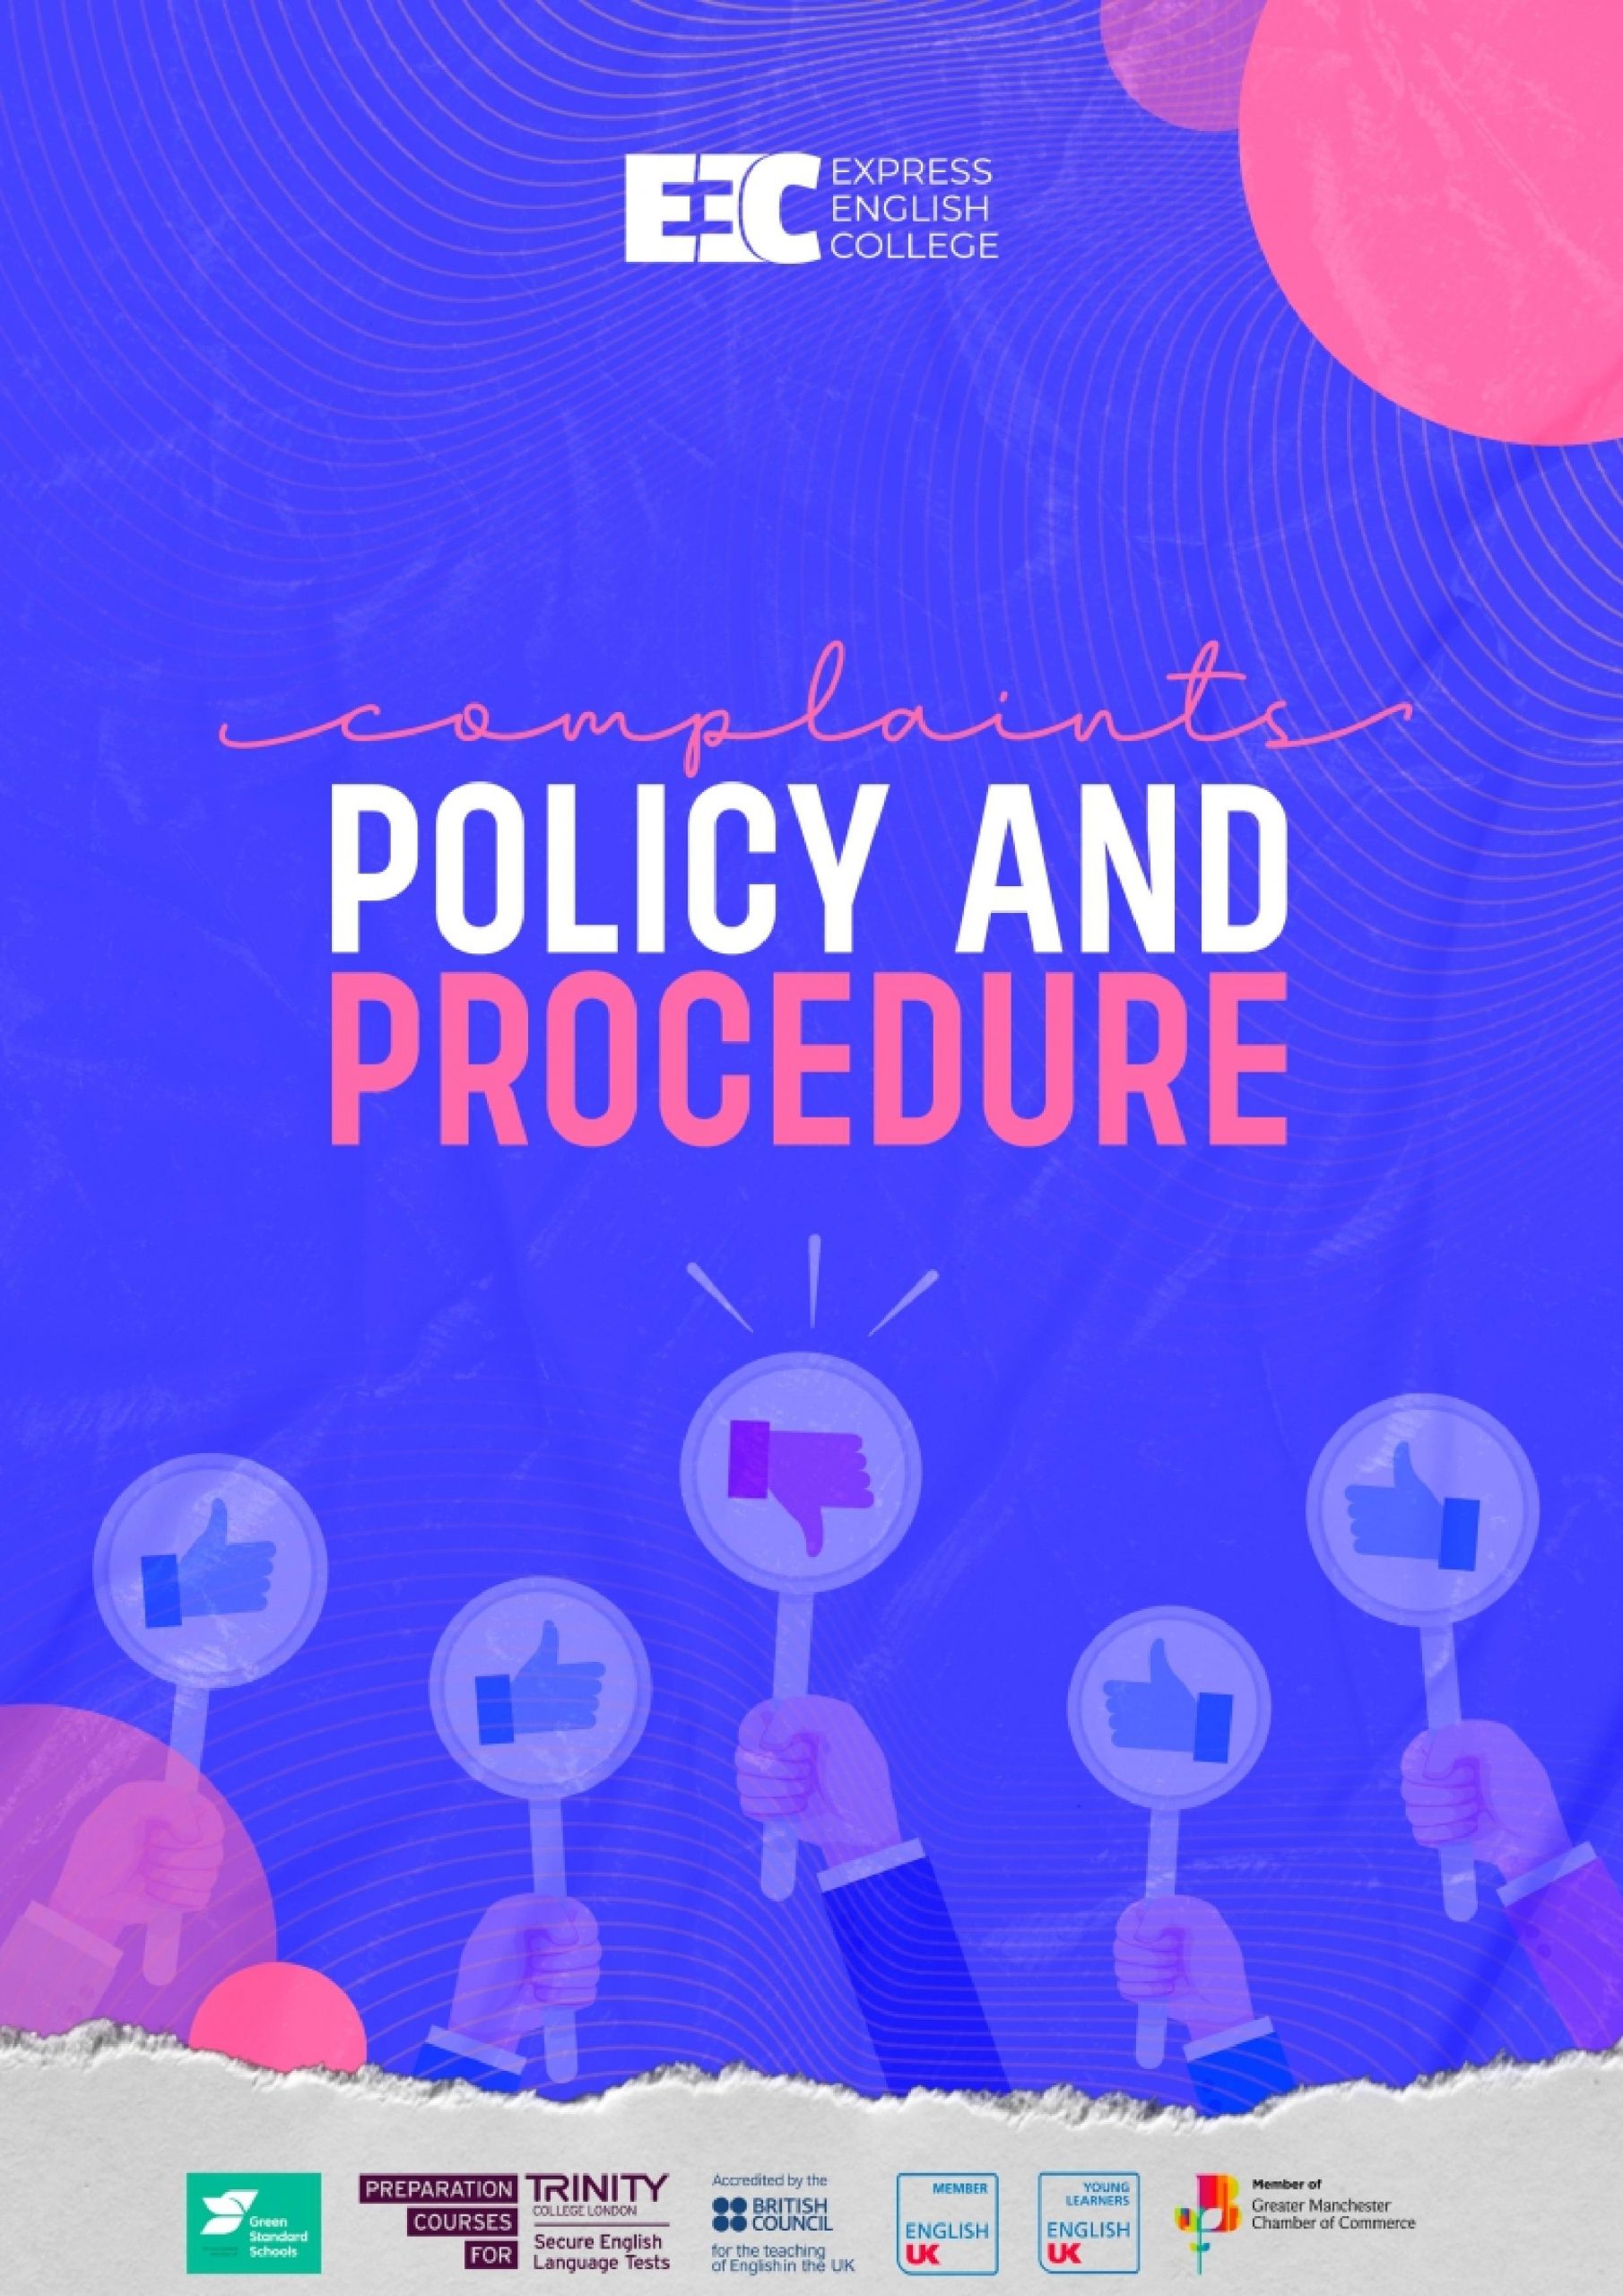 Complaints Policy & Procedure